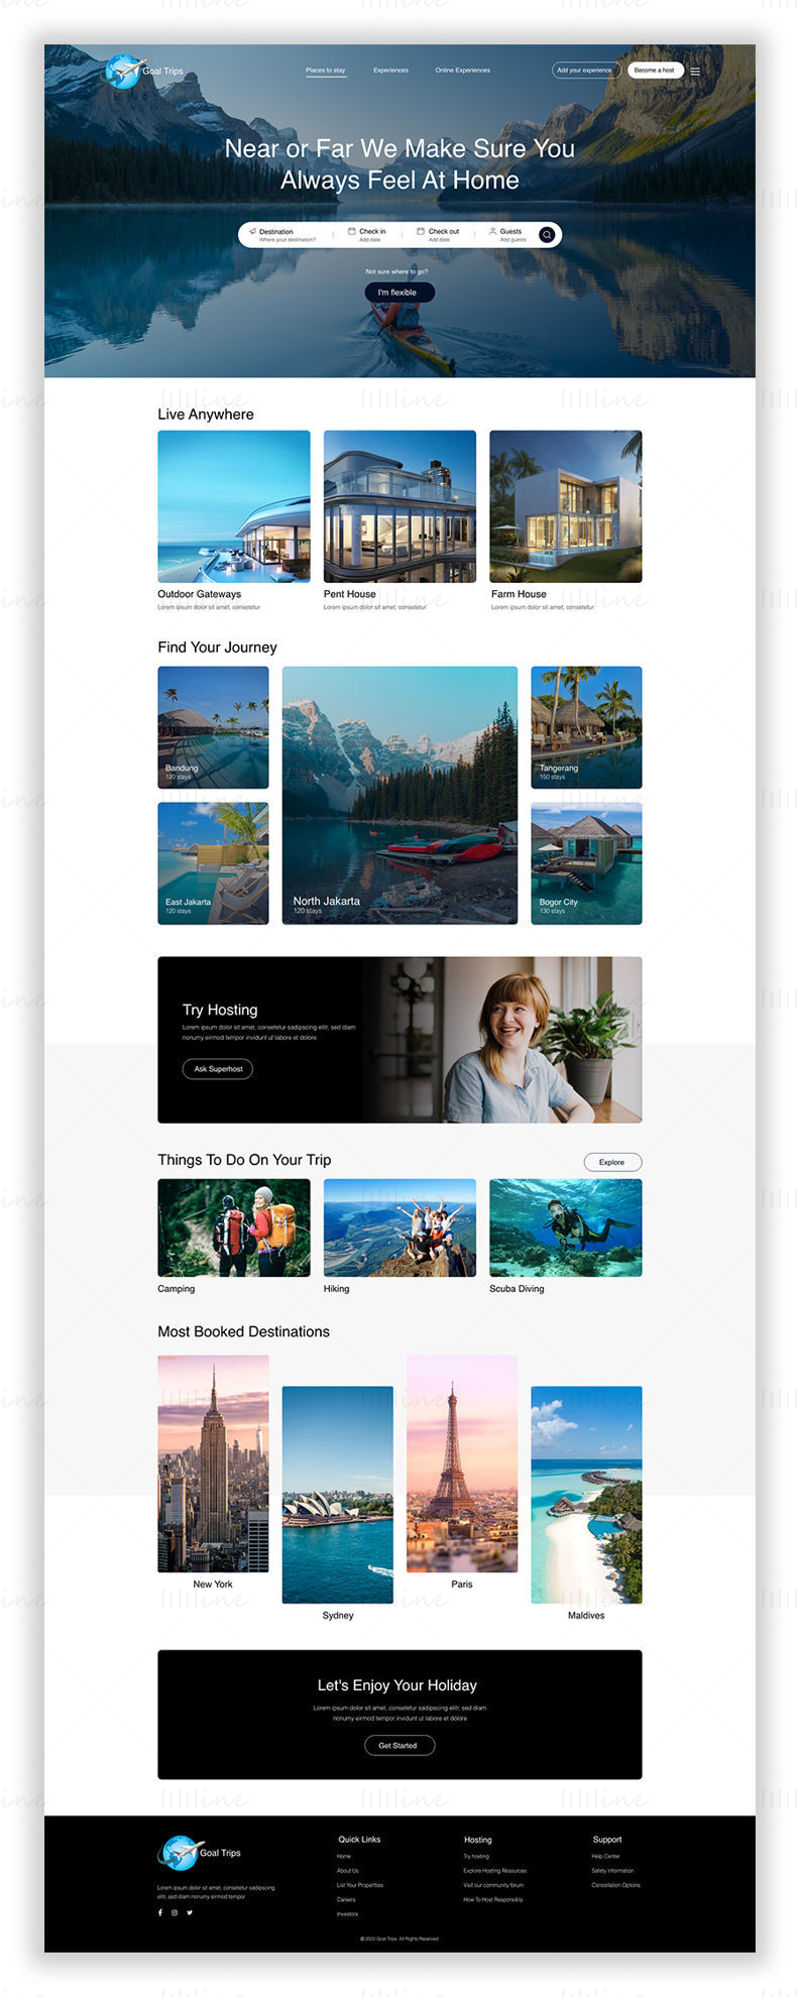 Goal旅行旅游公司企业网站着陆页模板 - UI Adobe XD